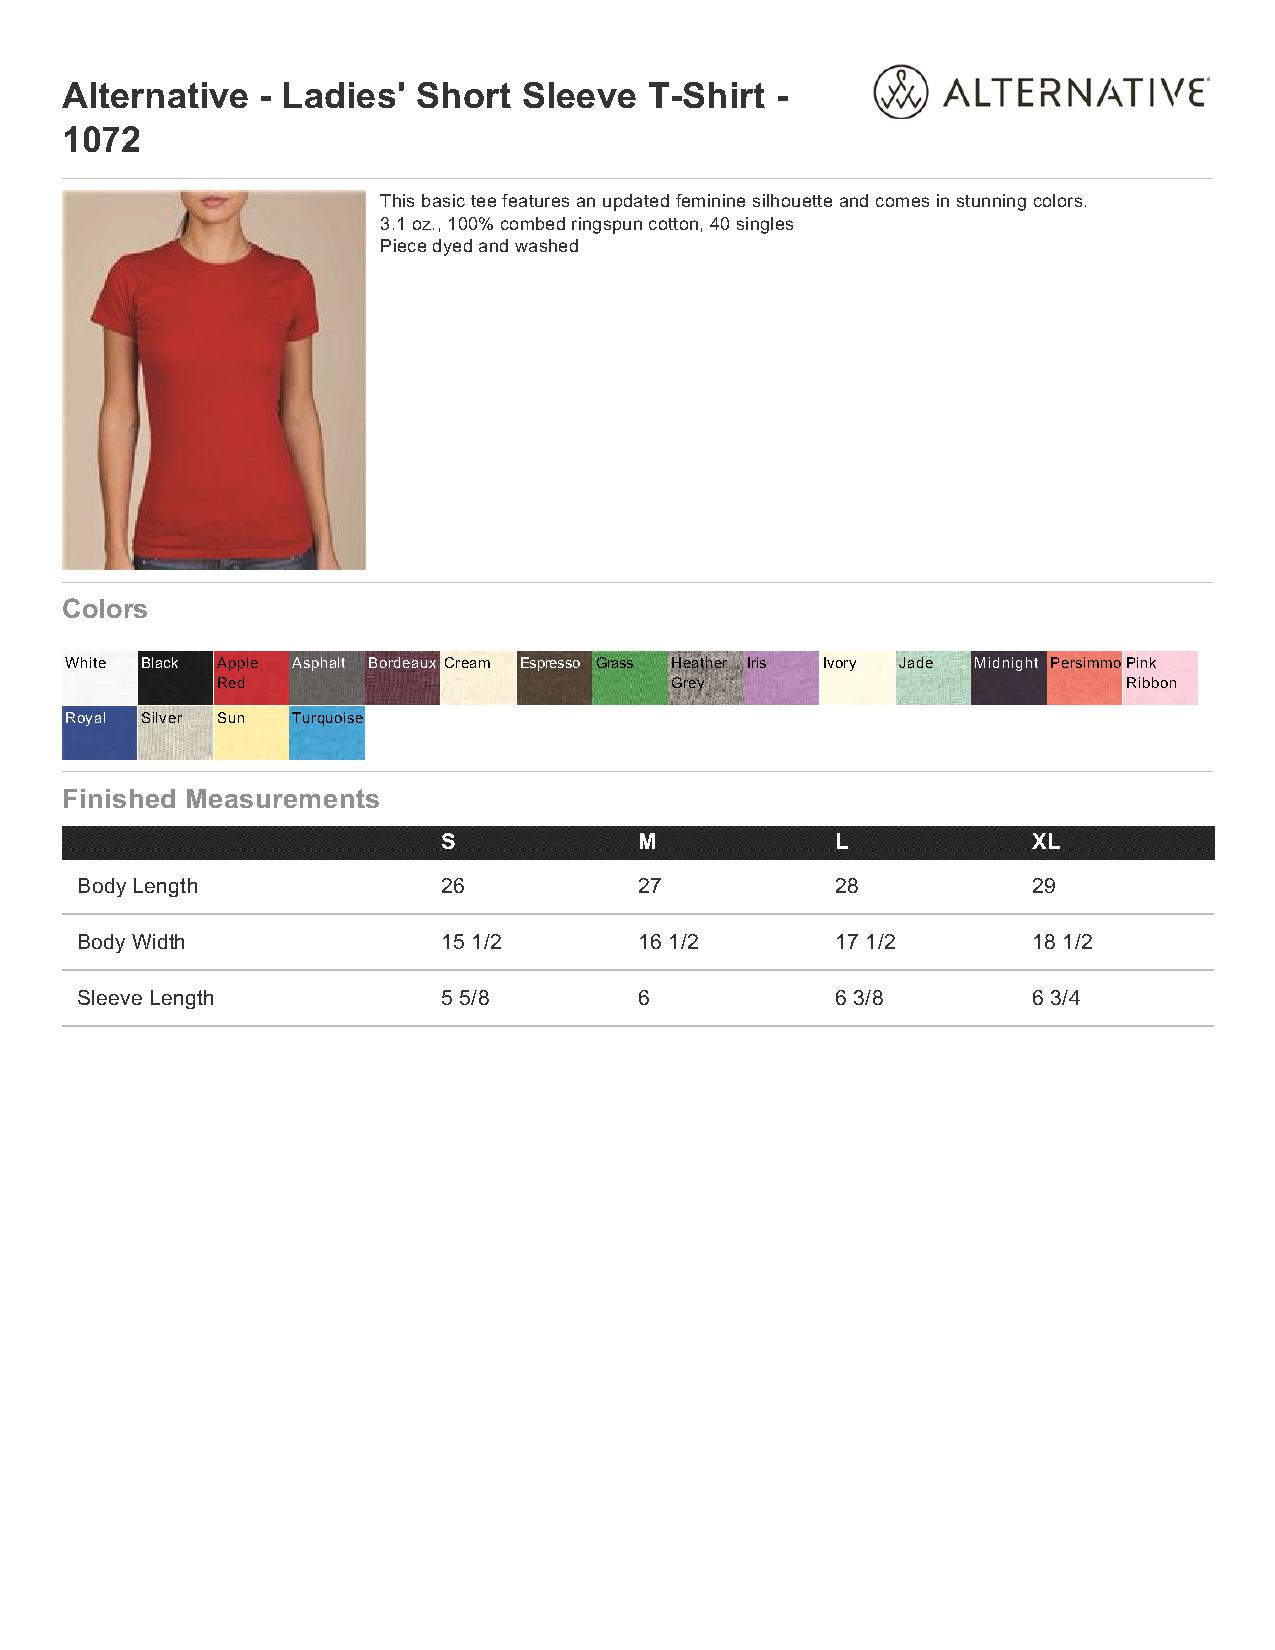 Alternative 1072 Ladies' Short Sleeve T-Shirt $4.84 - Women's T-Shirts